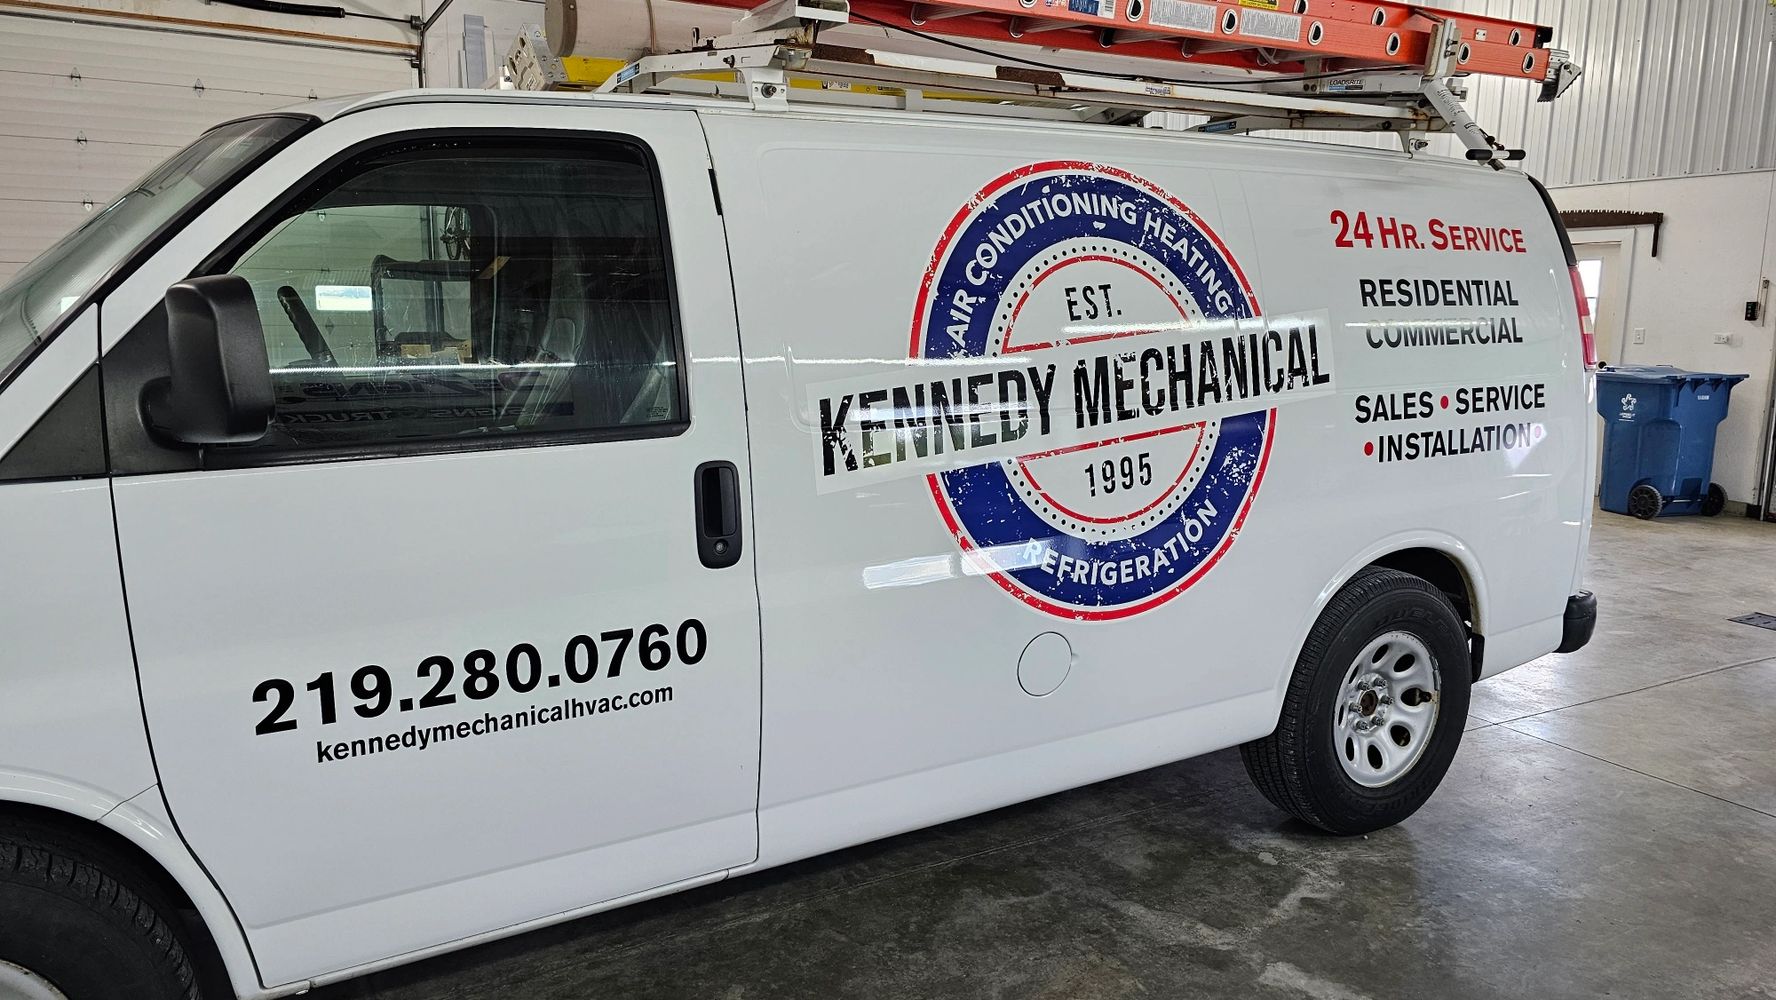 HVAC work van, Newton county Indiana, hvac repair, air conditioning repair, Morocco, Indiana, Kenned